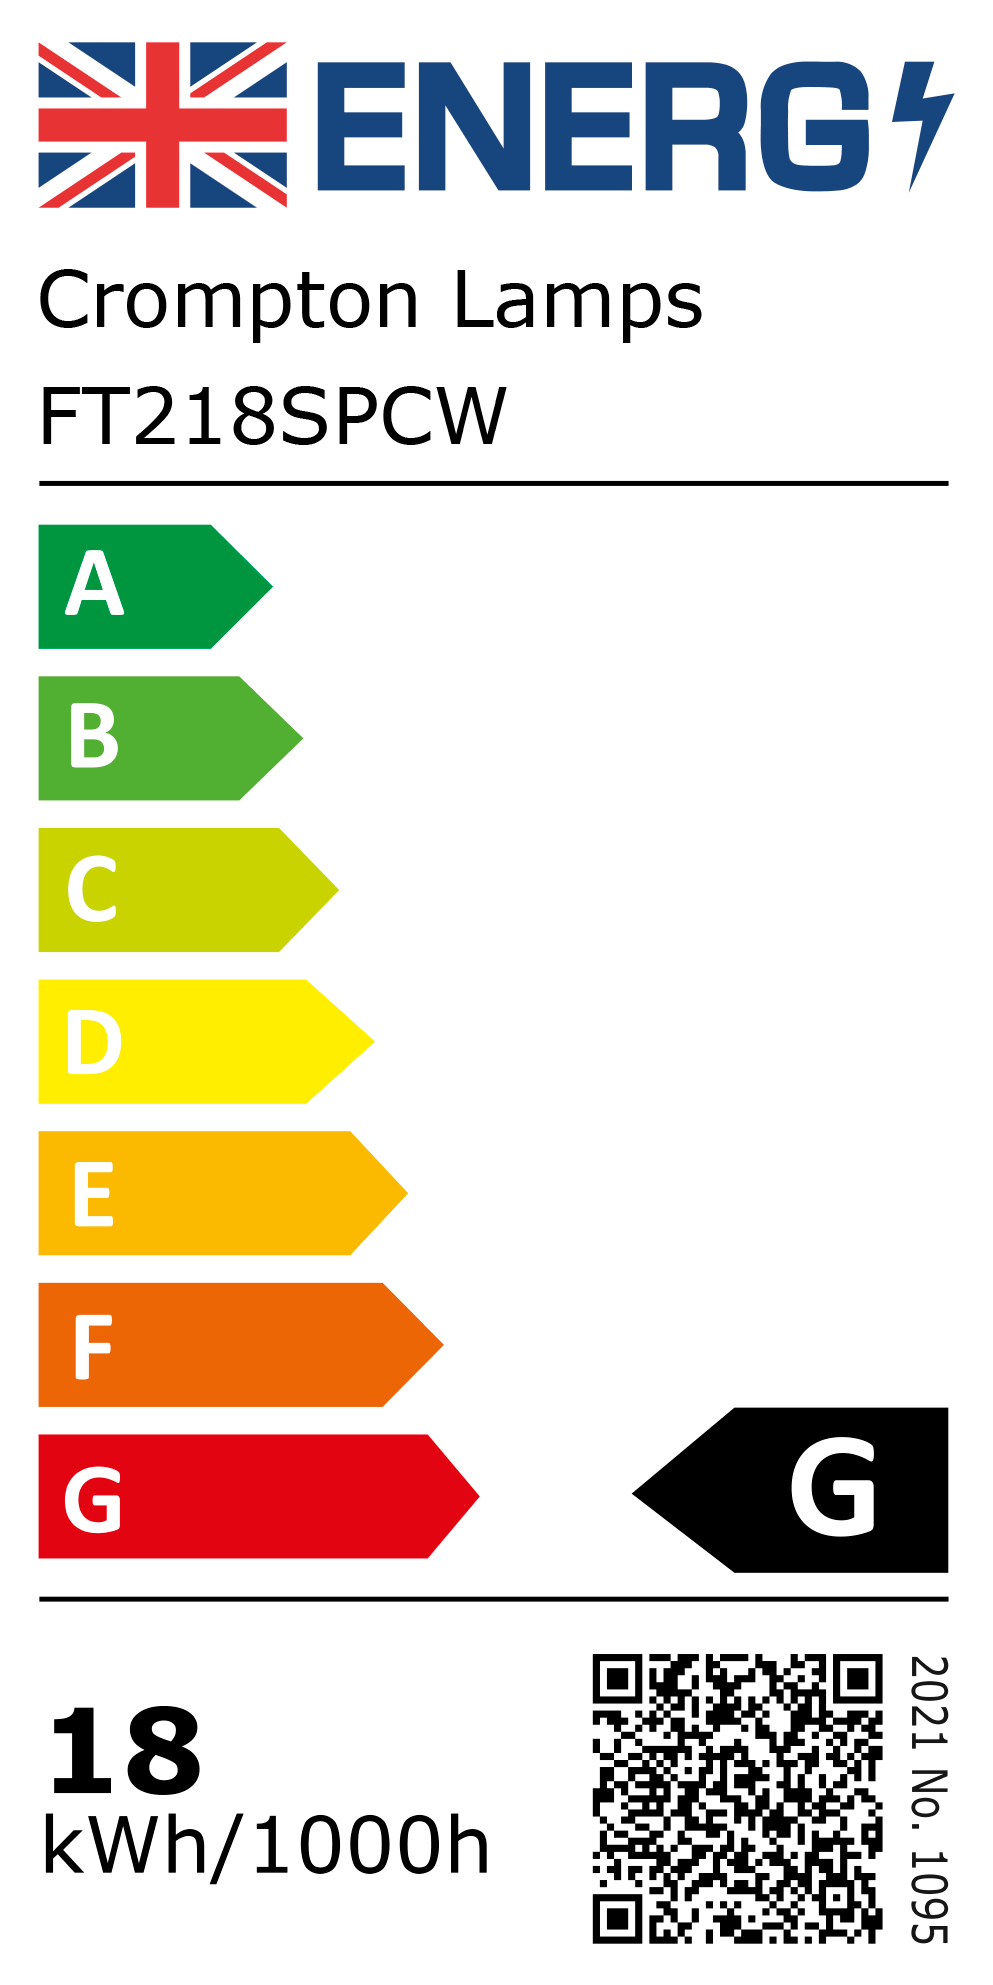 New 2021 Energy Rating Label: Stock Code FT218SPCW